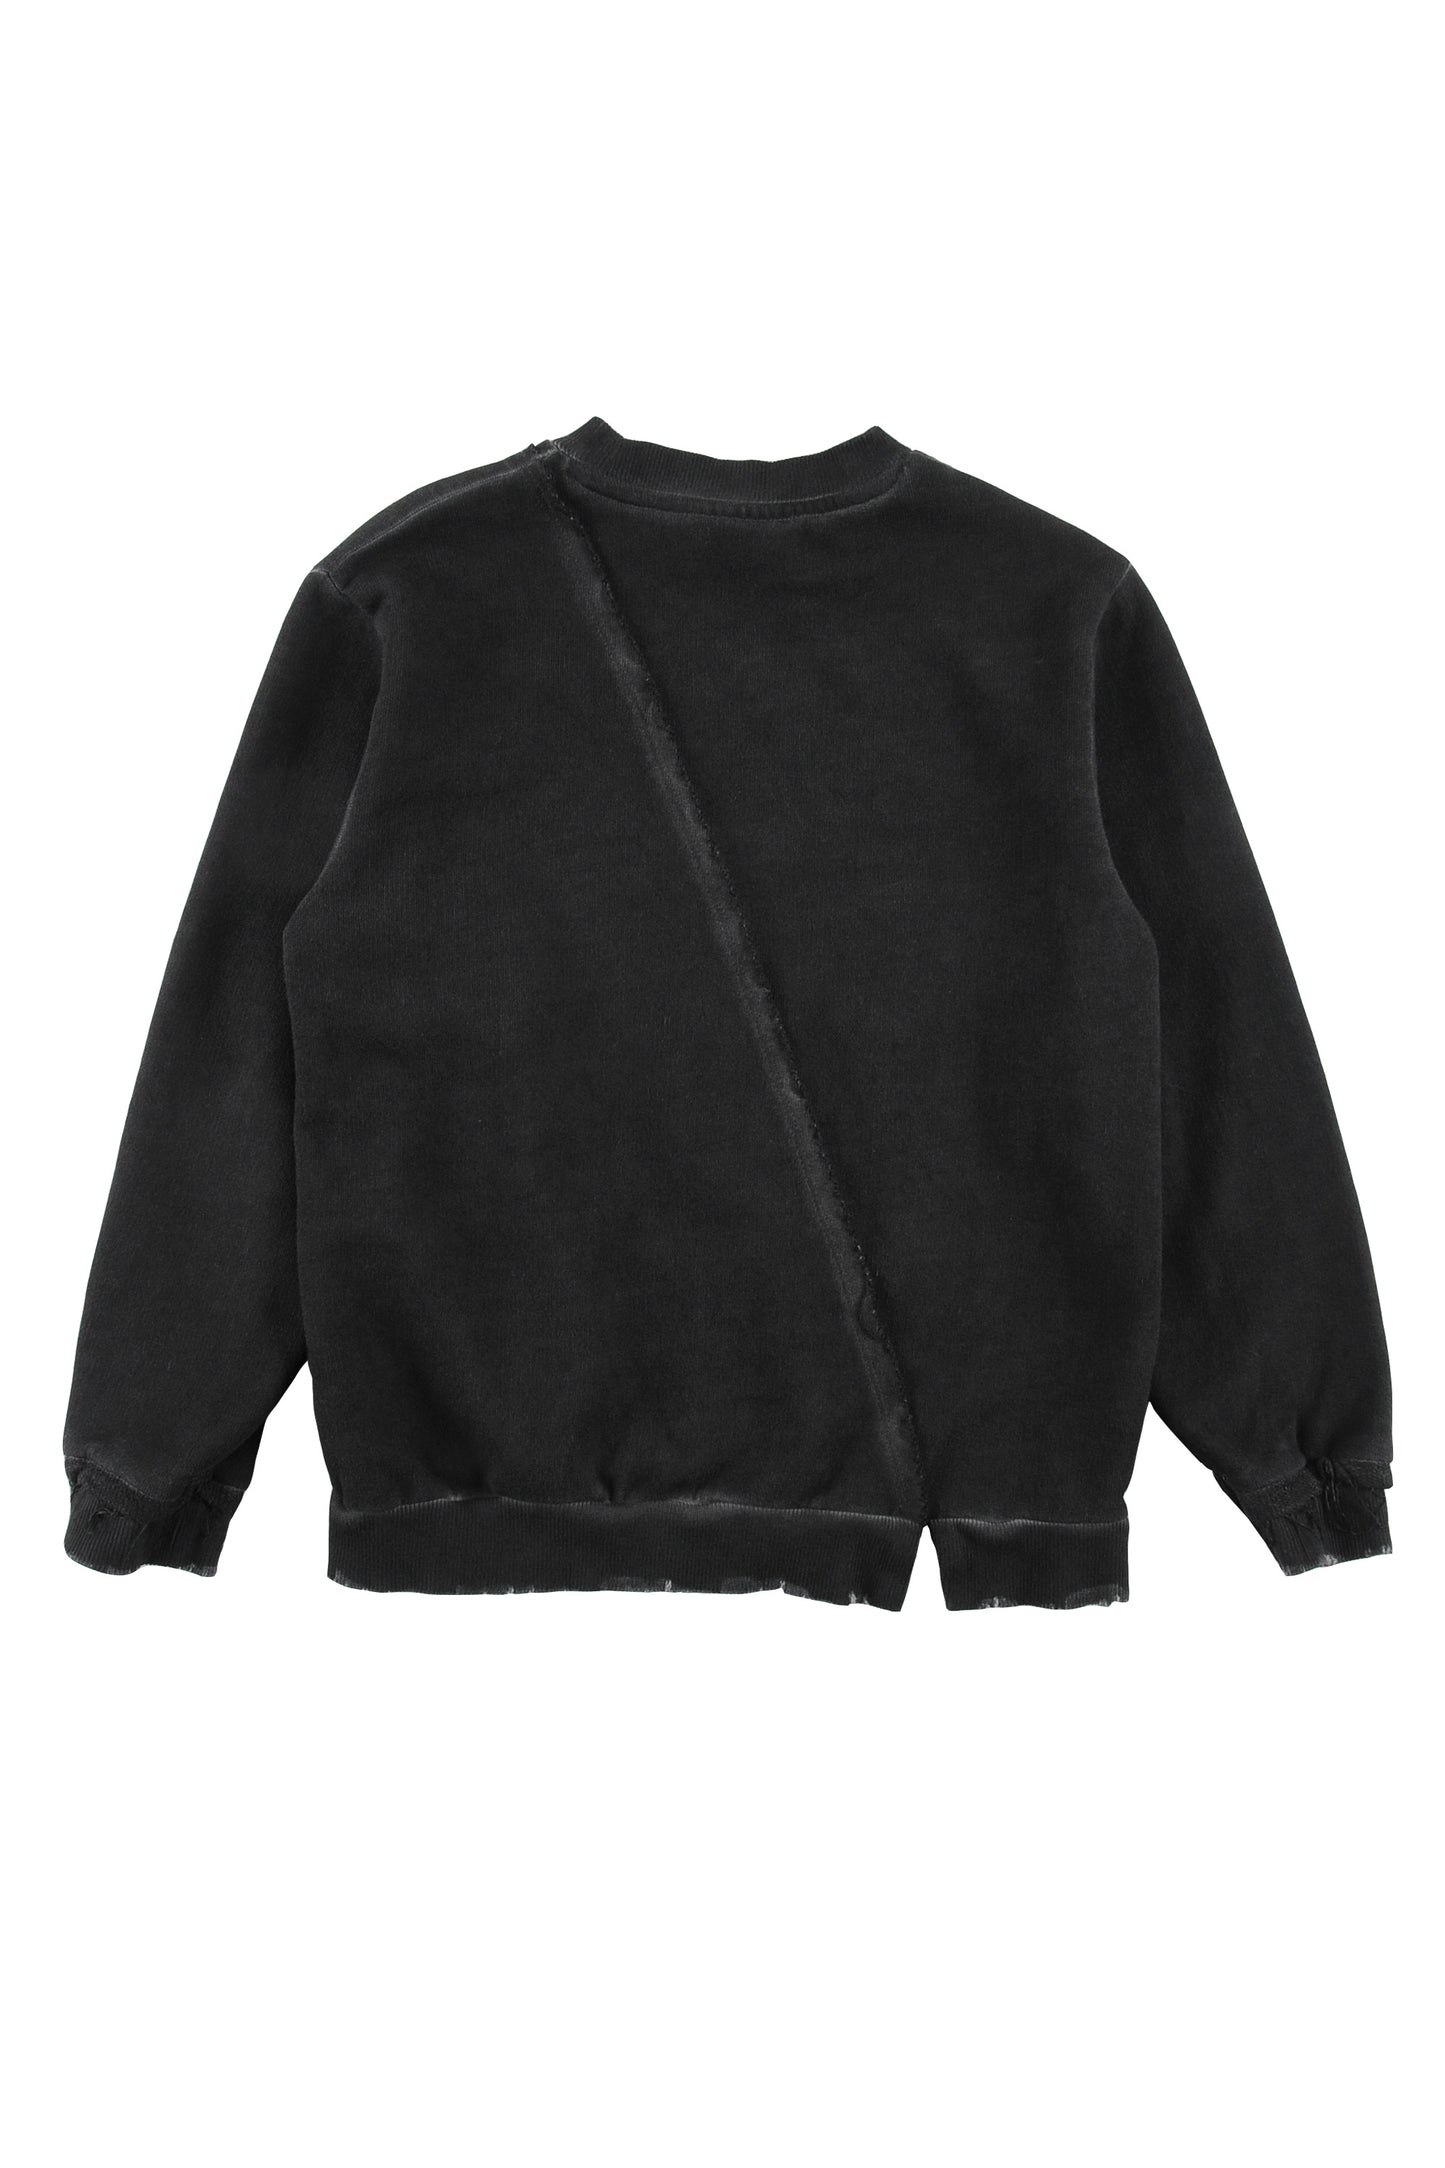 Loud Apparel British Asymmetric Sweater